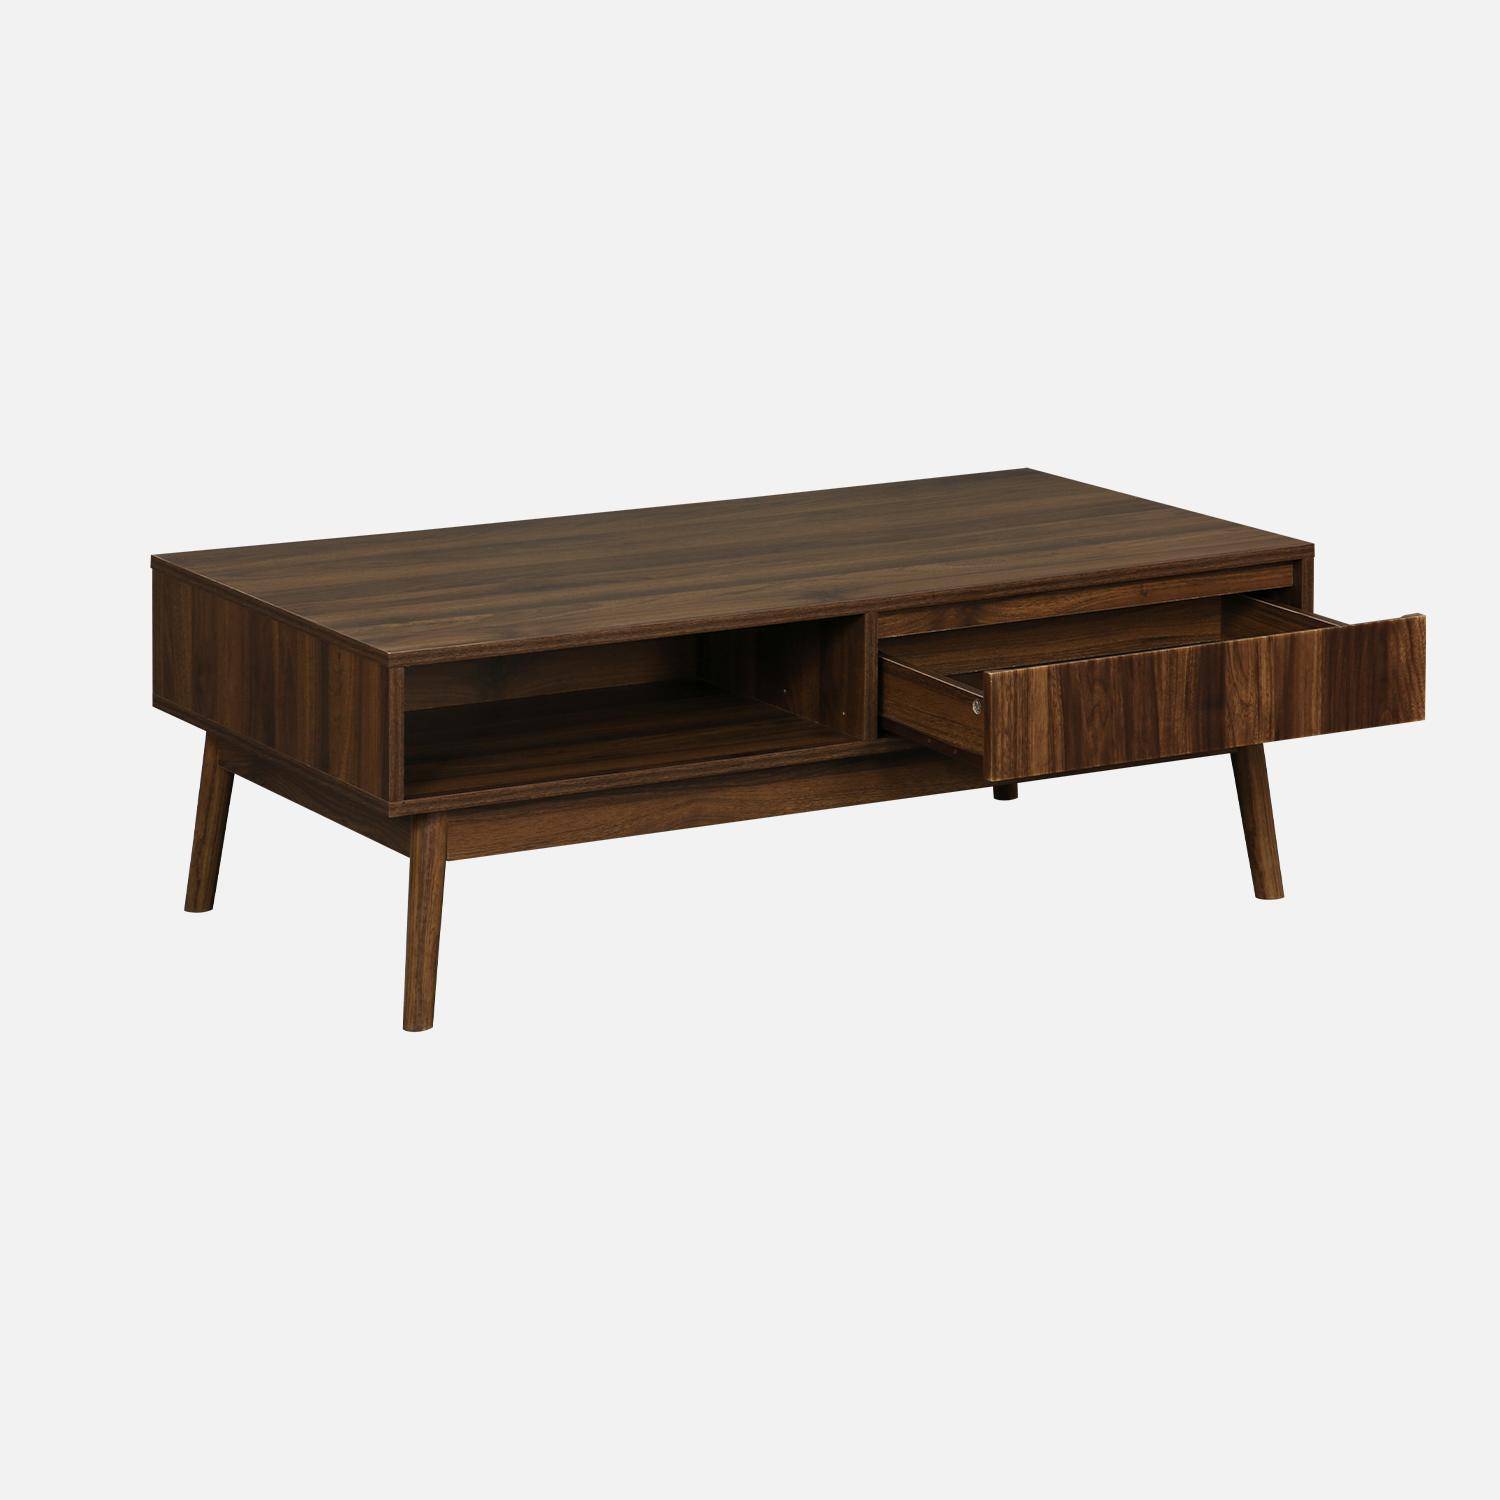 Wooden coffee table with one drawer storage, dark wood, L110xW59xH39cm Photo6